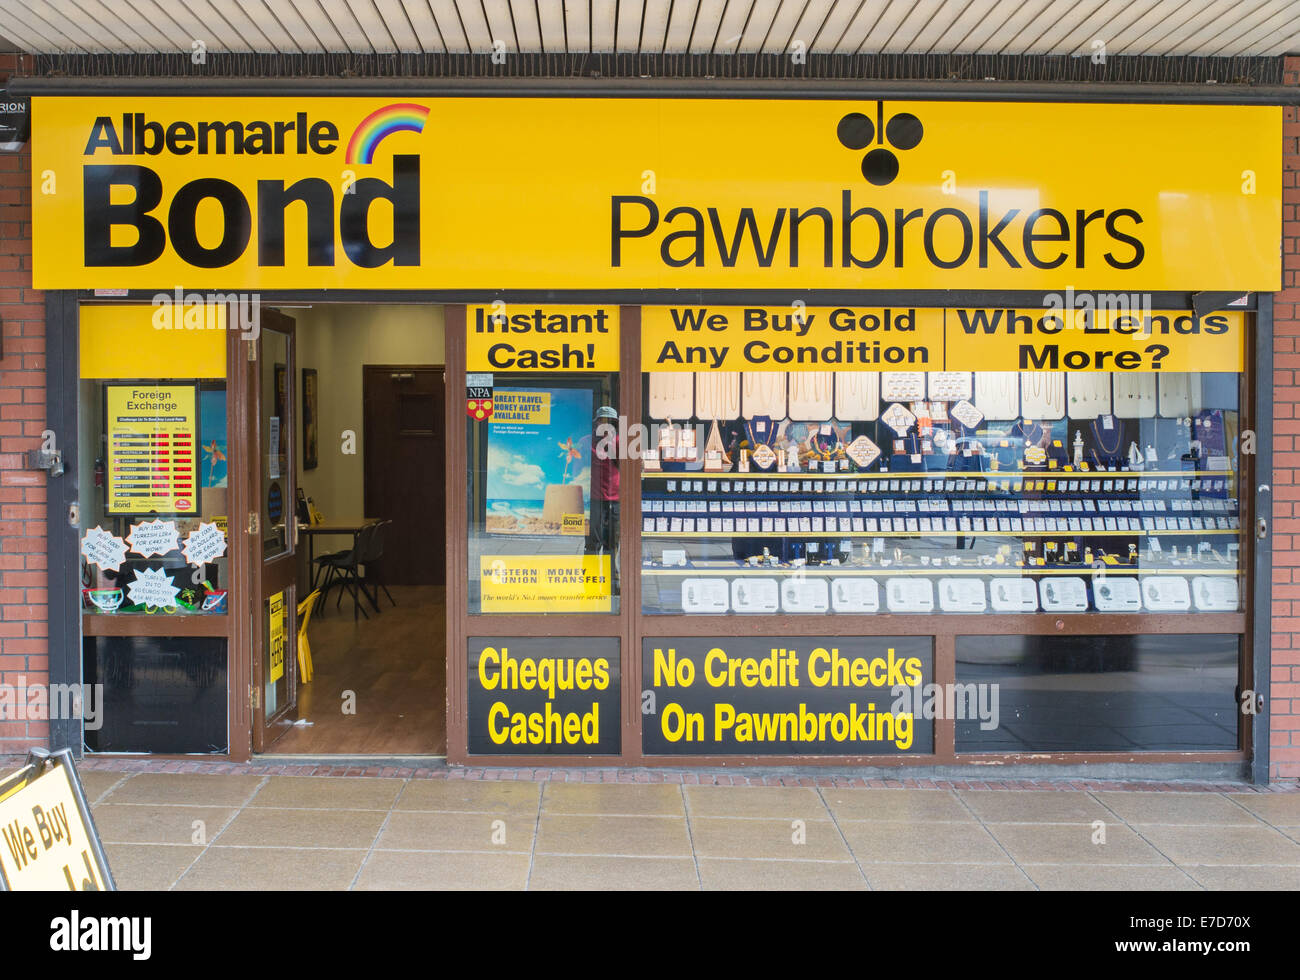 Bond tienda pawnbrokers Albemarle North Shields, Nororiental, Inglaterra, Reino Unido. Foto de stock